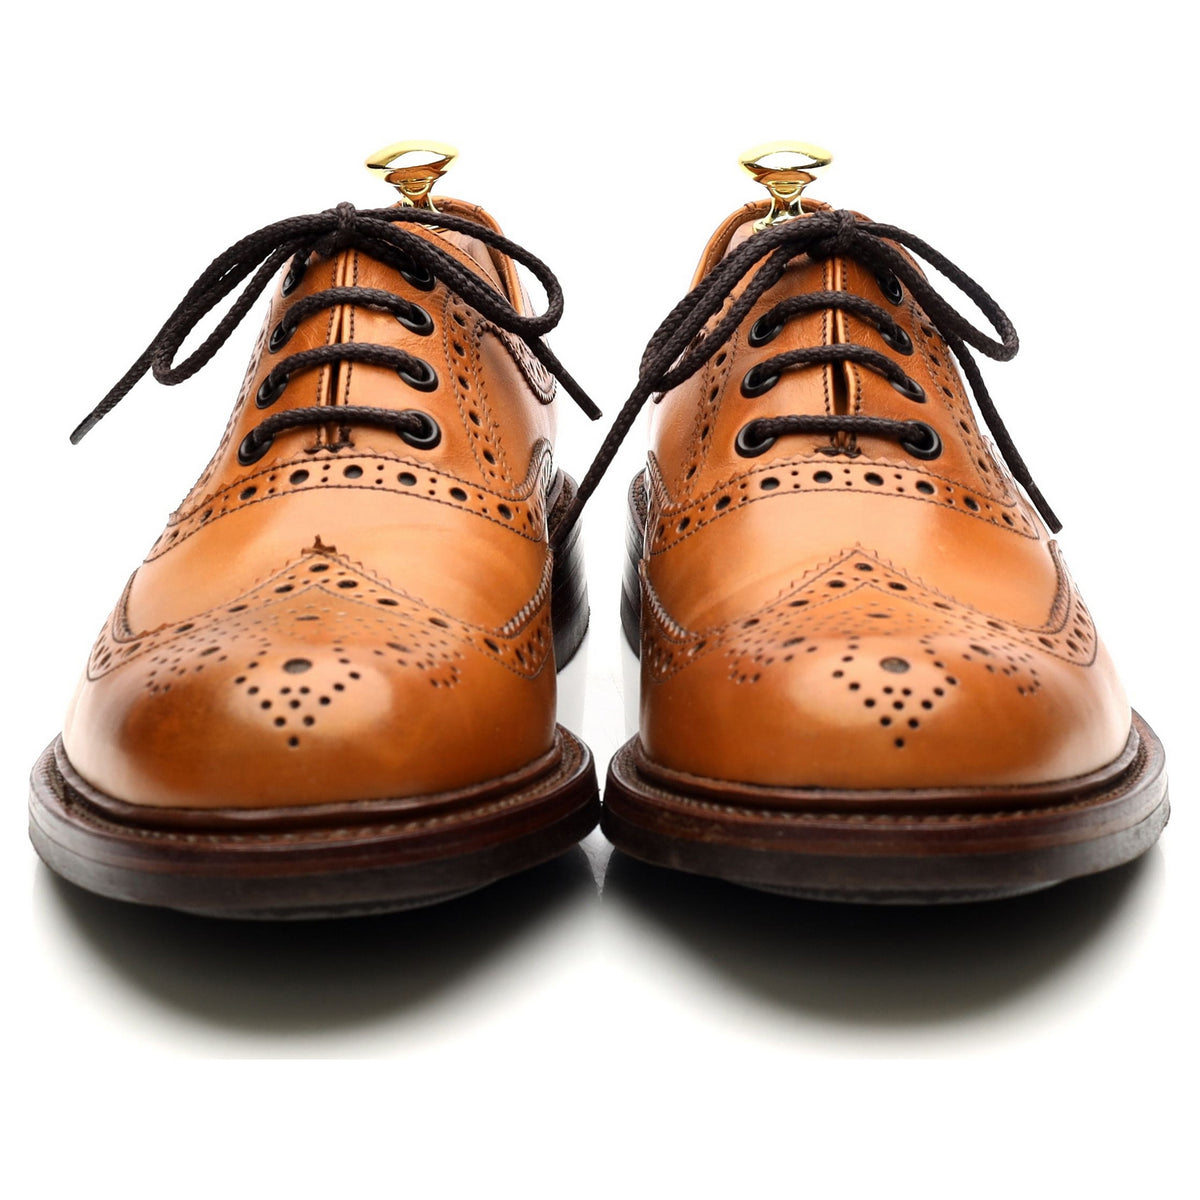 1880 &#39;Edward&#39; Tan Brown Leather Brogues UK 8.5 G